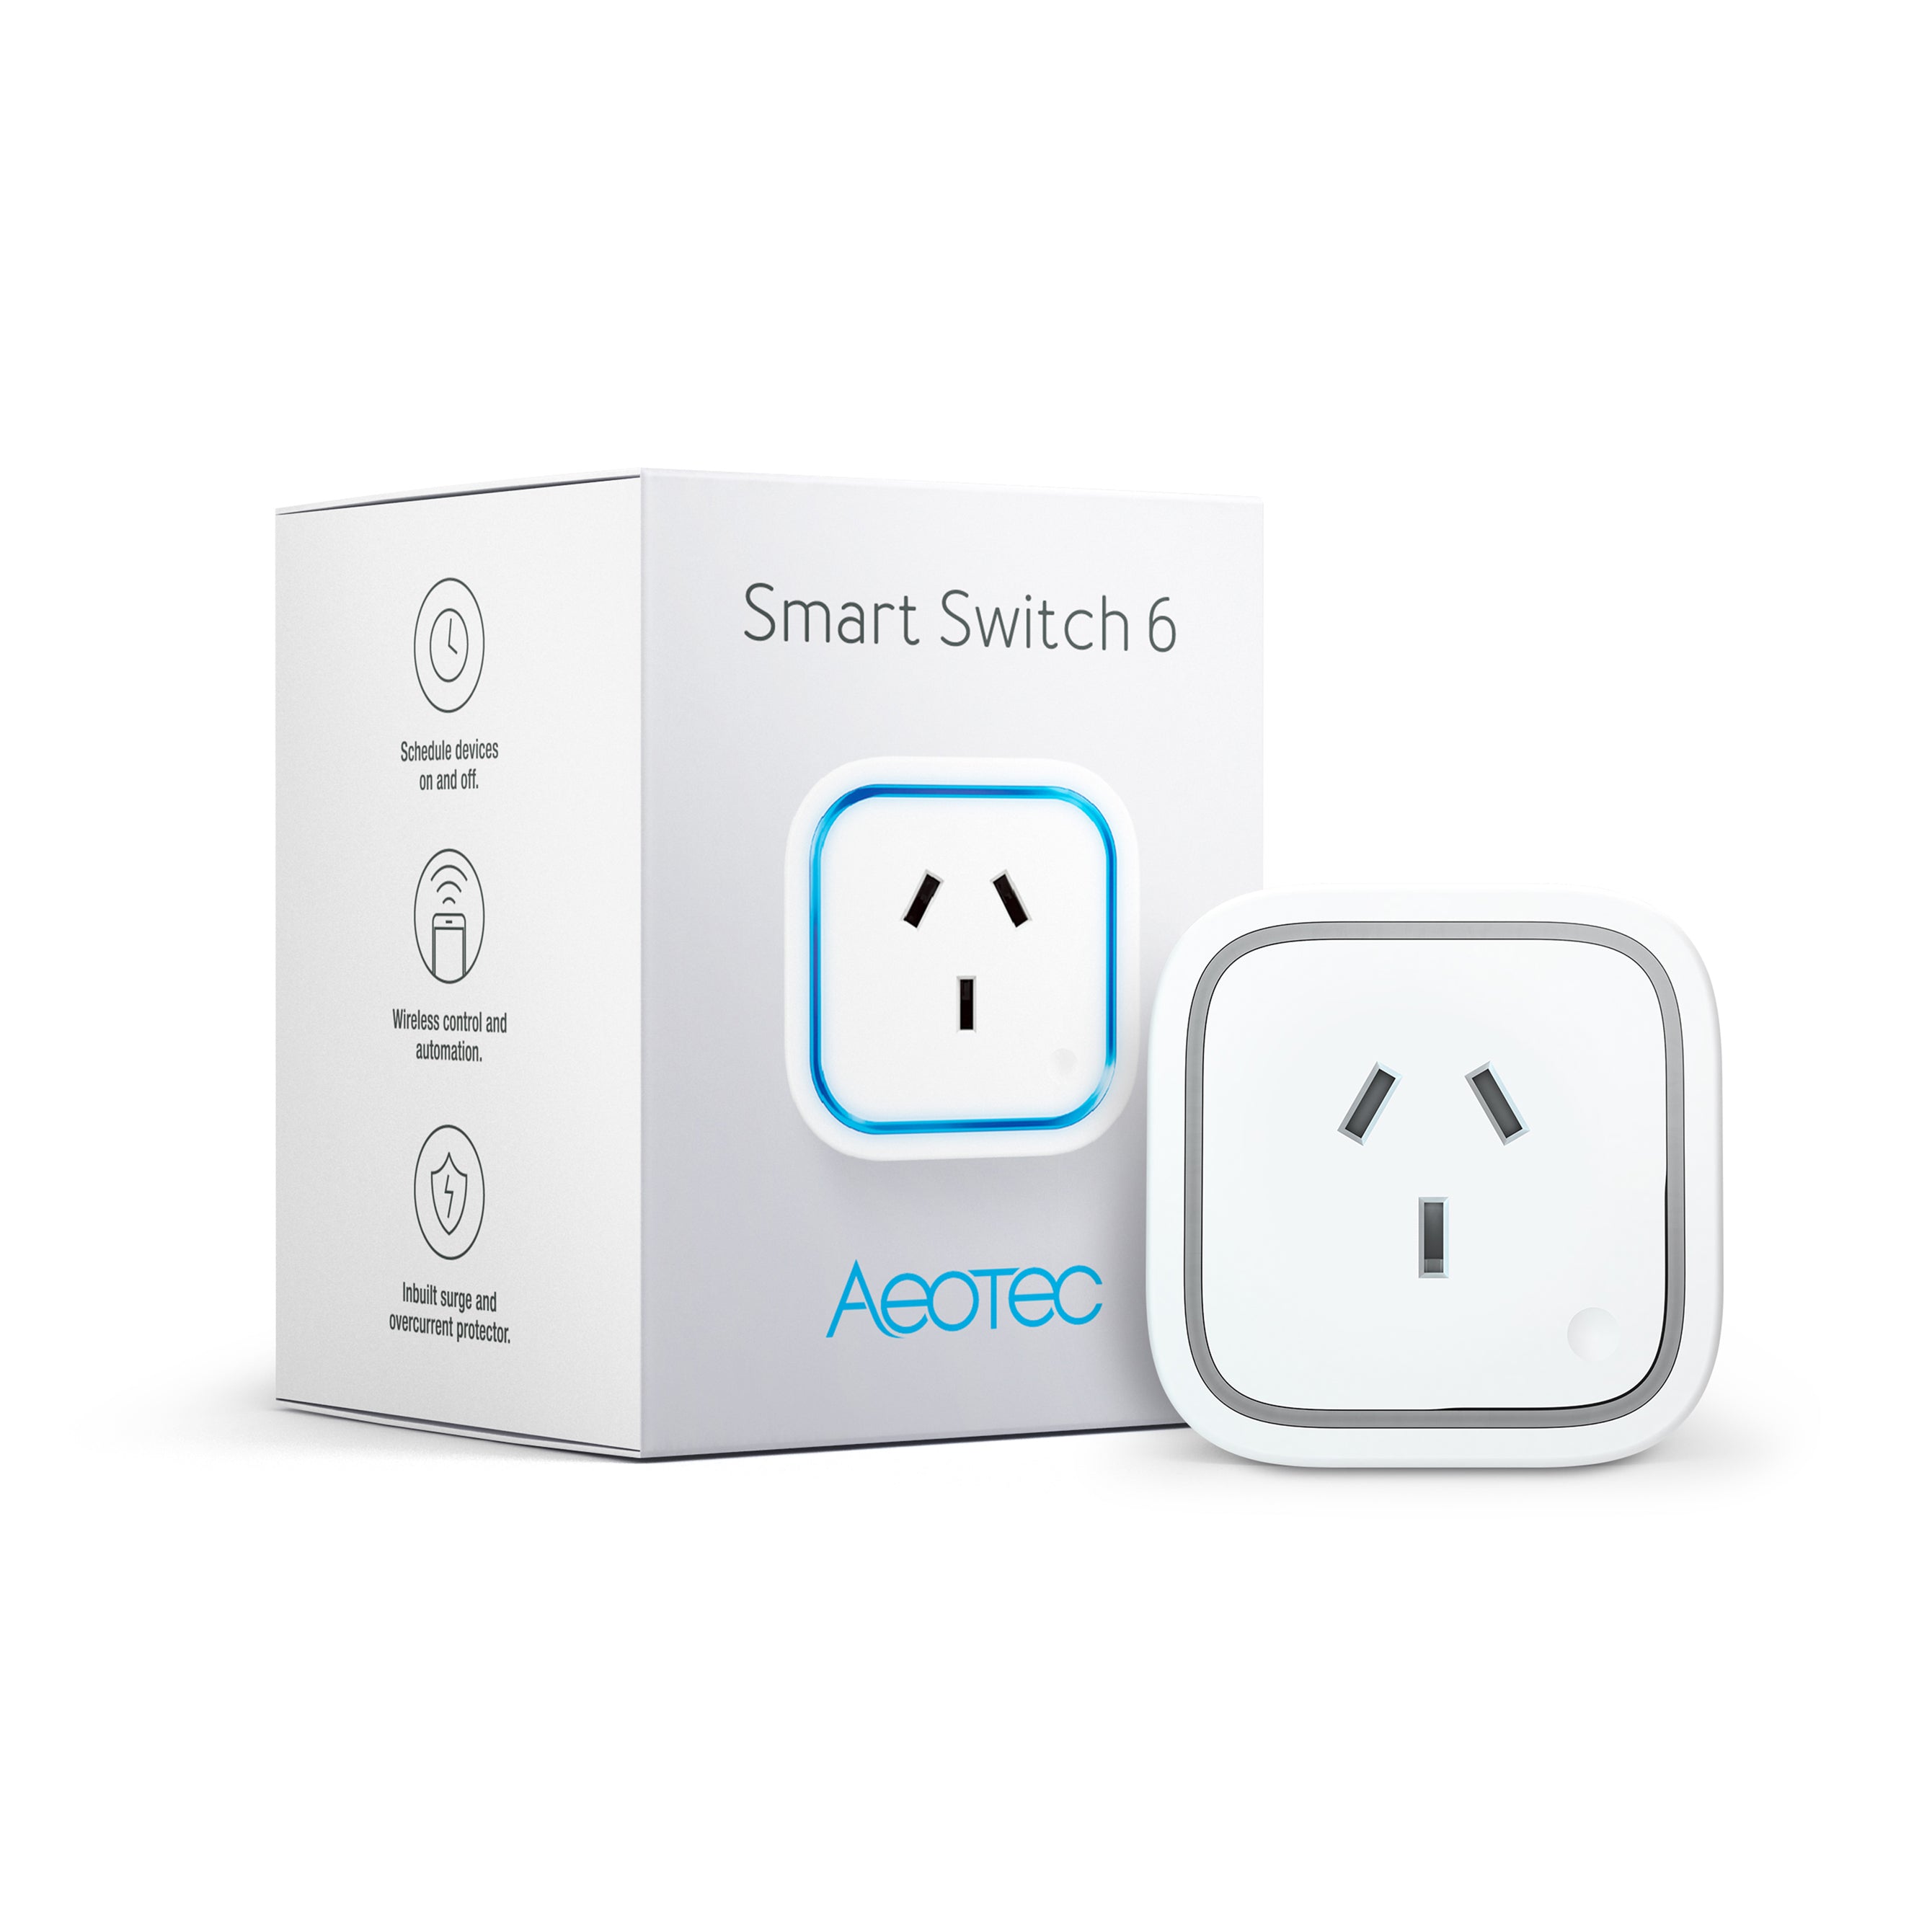 Smart Switch 6  (AU model)